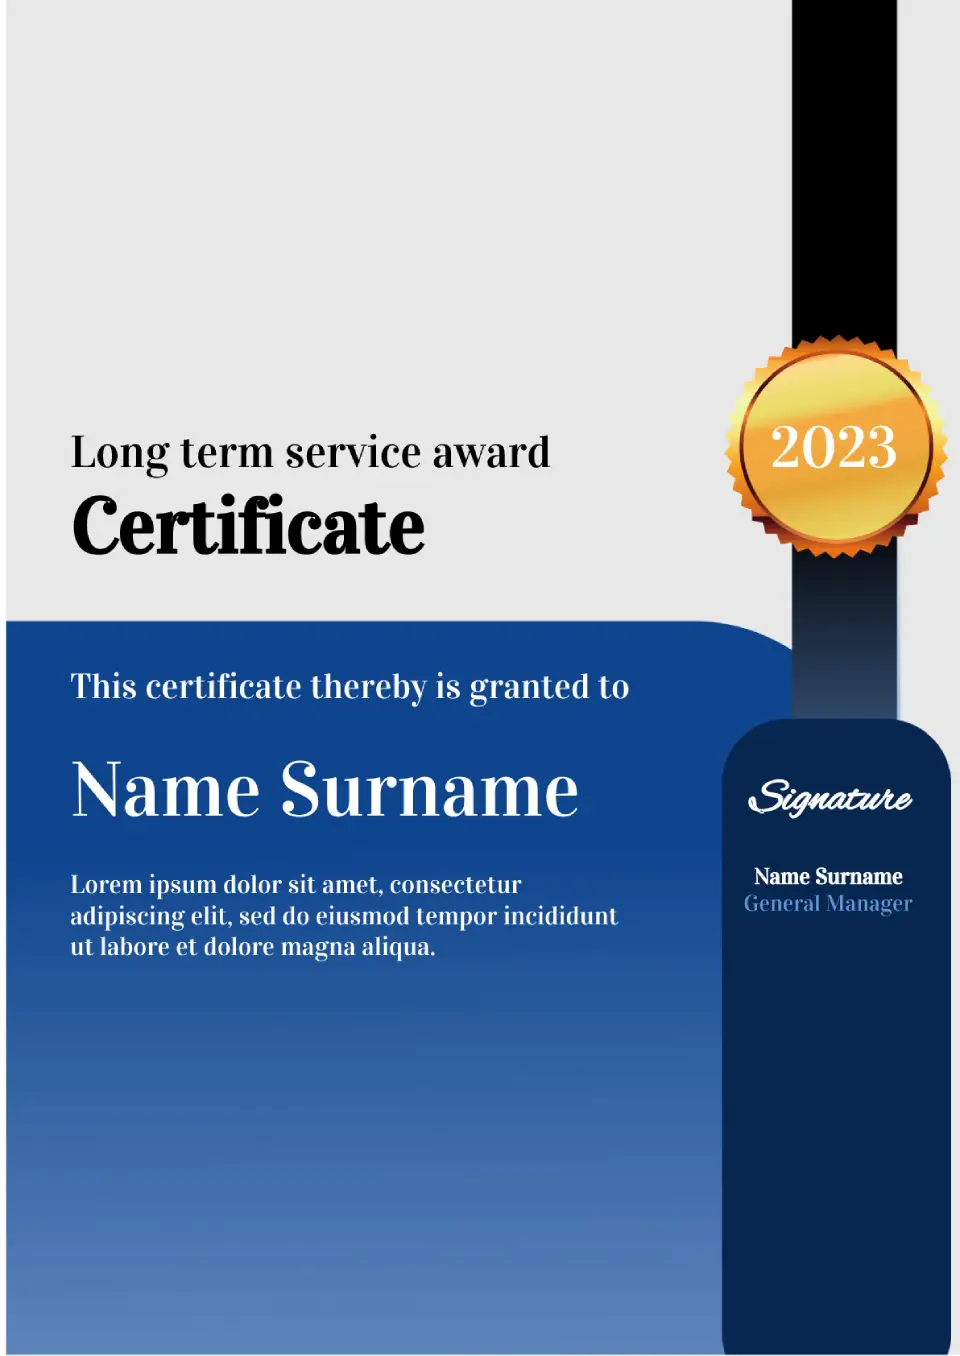 Long Term Service Award Certificate for Google Docs